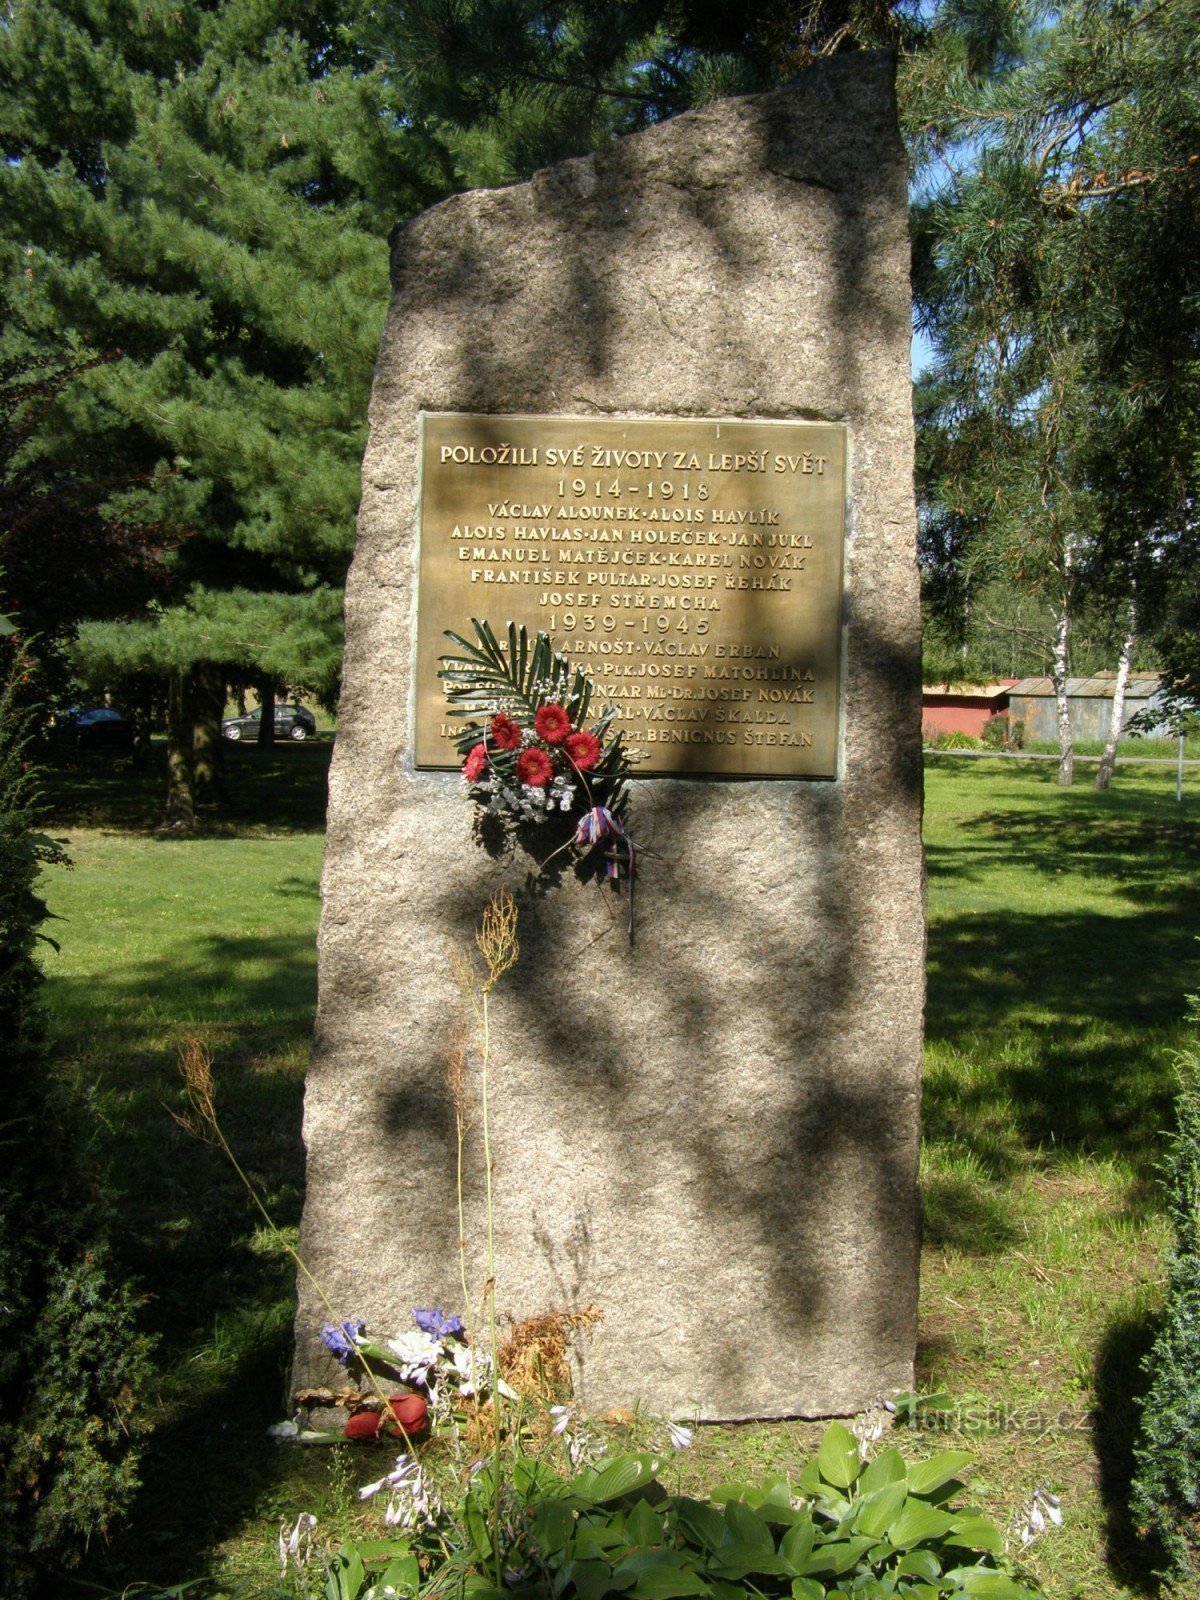 Hradec Králové - monumento alle vittime delle guerre nel sobborgo della Slesia